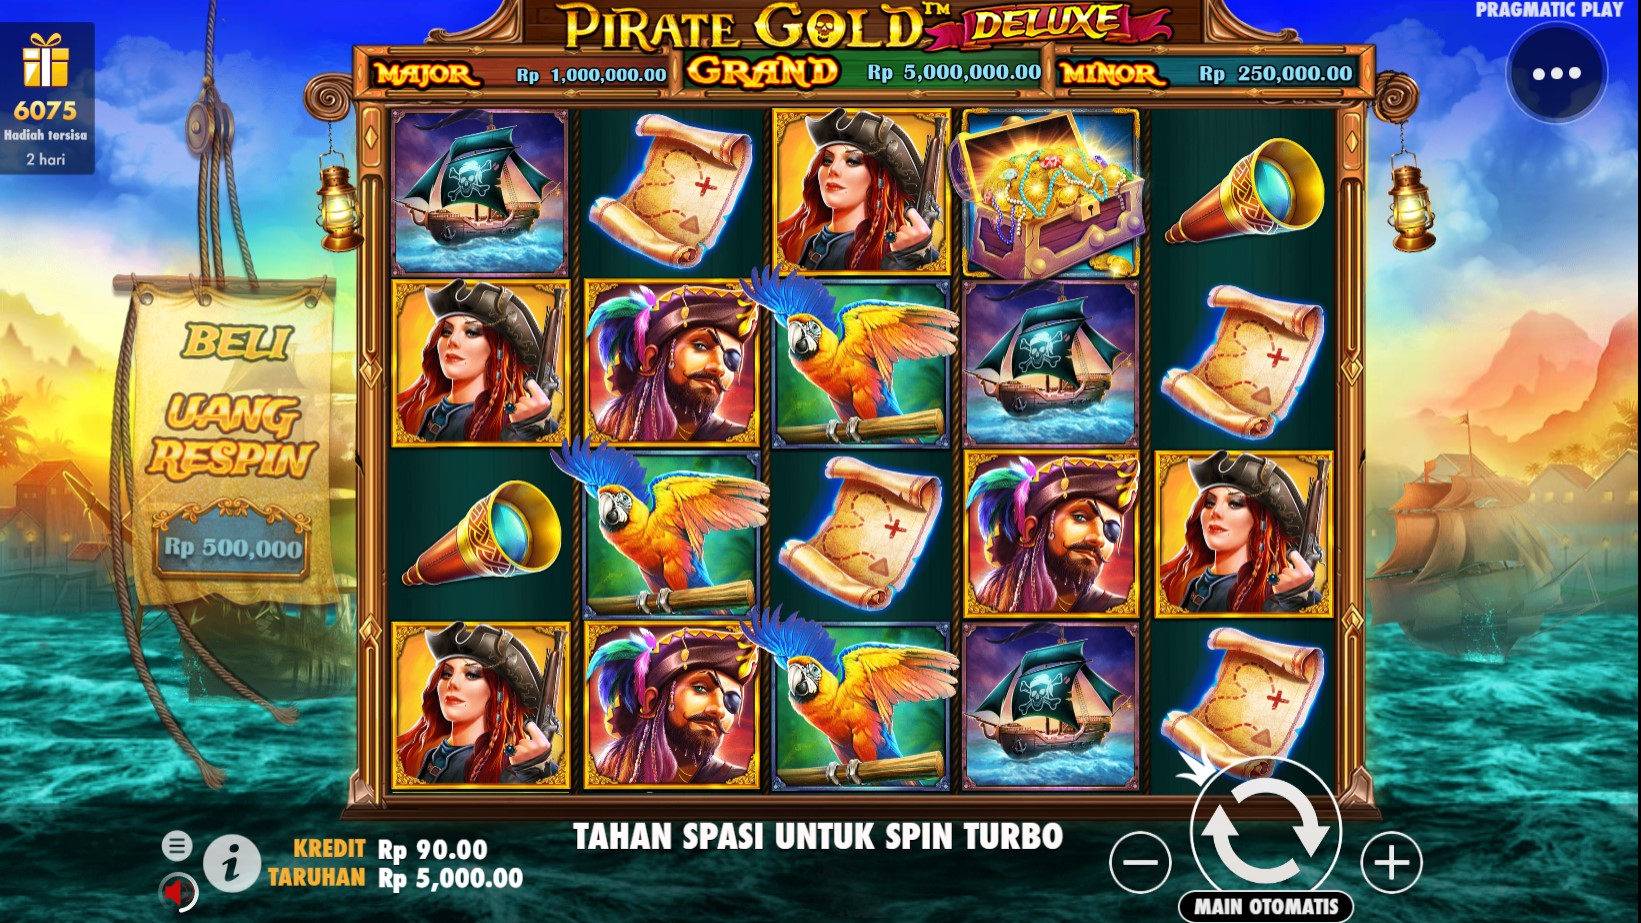 Mengarungi Lautan Kekayaan Panduan Lengkap Menang Bermain Pirate Gold Deluxe Pragmatic Play